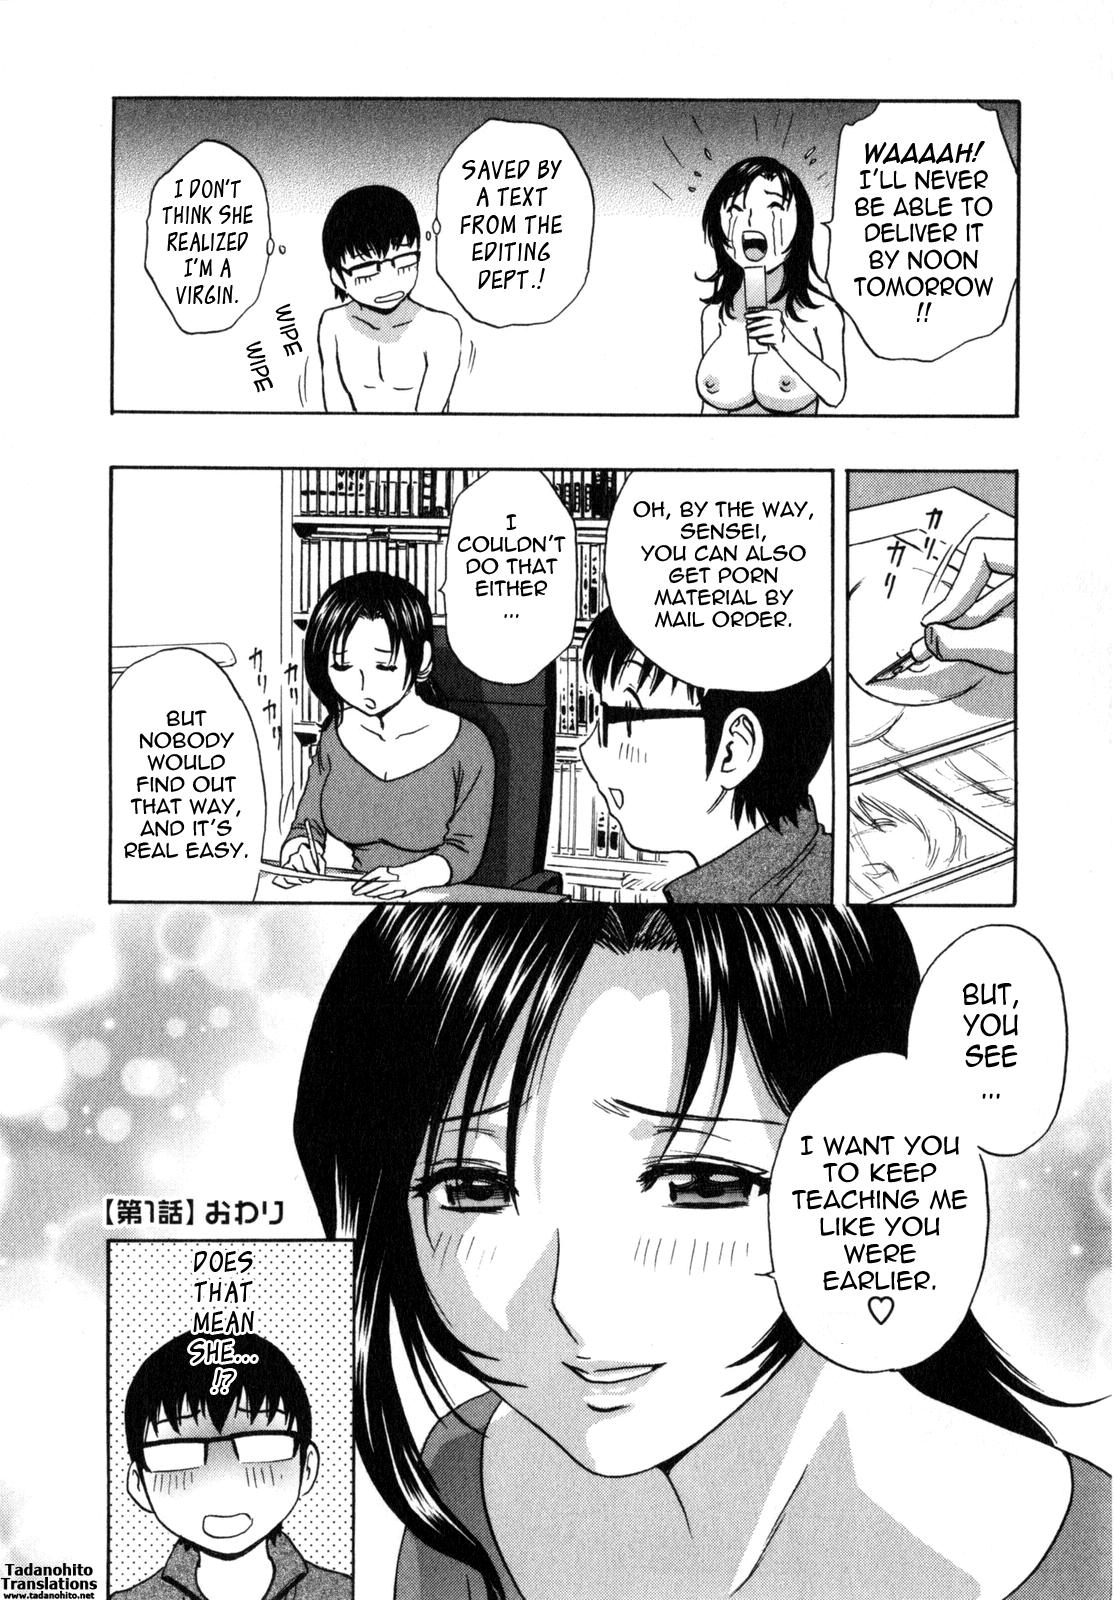 Life with Married Women Just Like a Manga 1 25